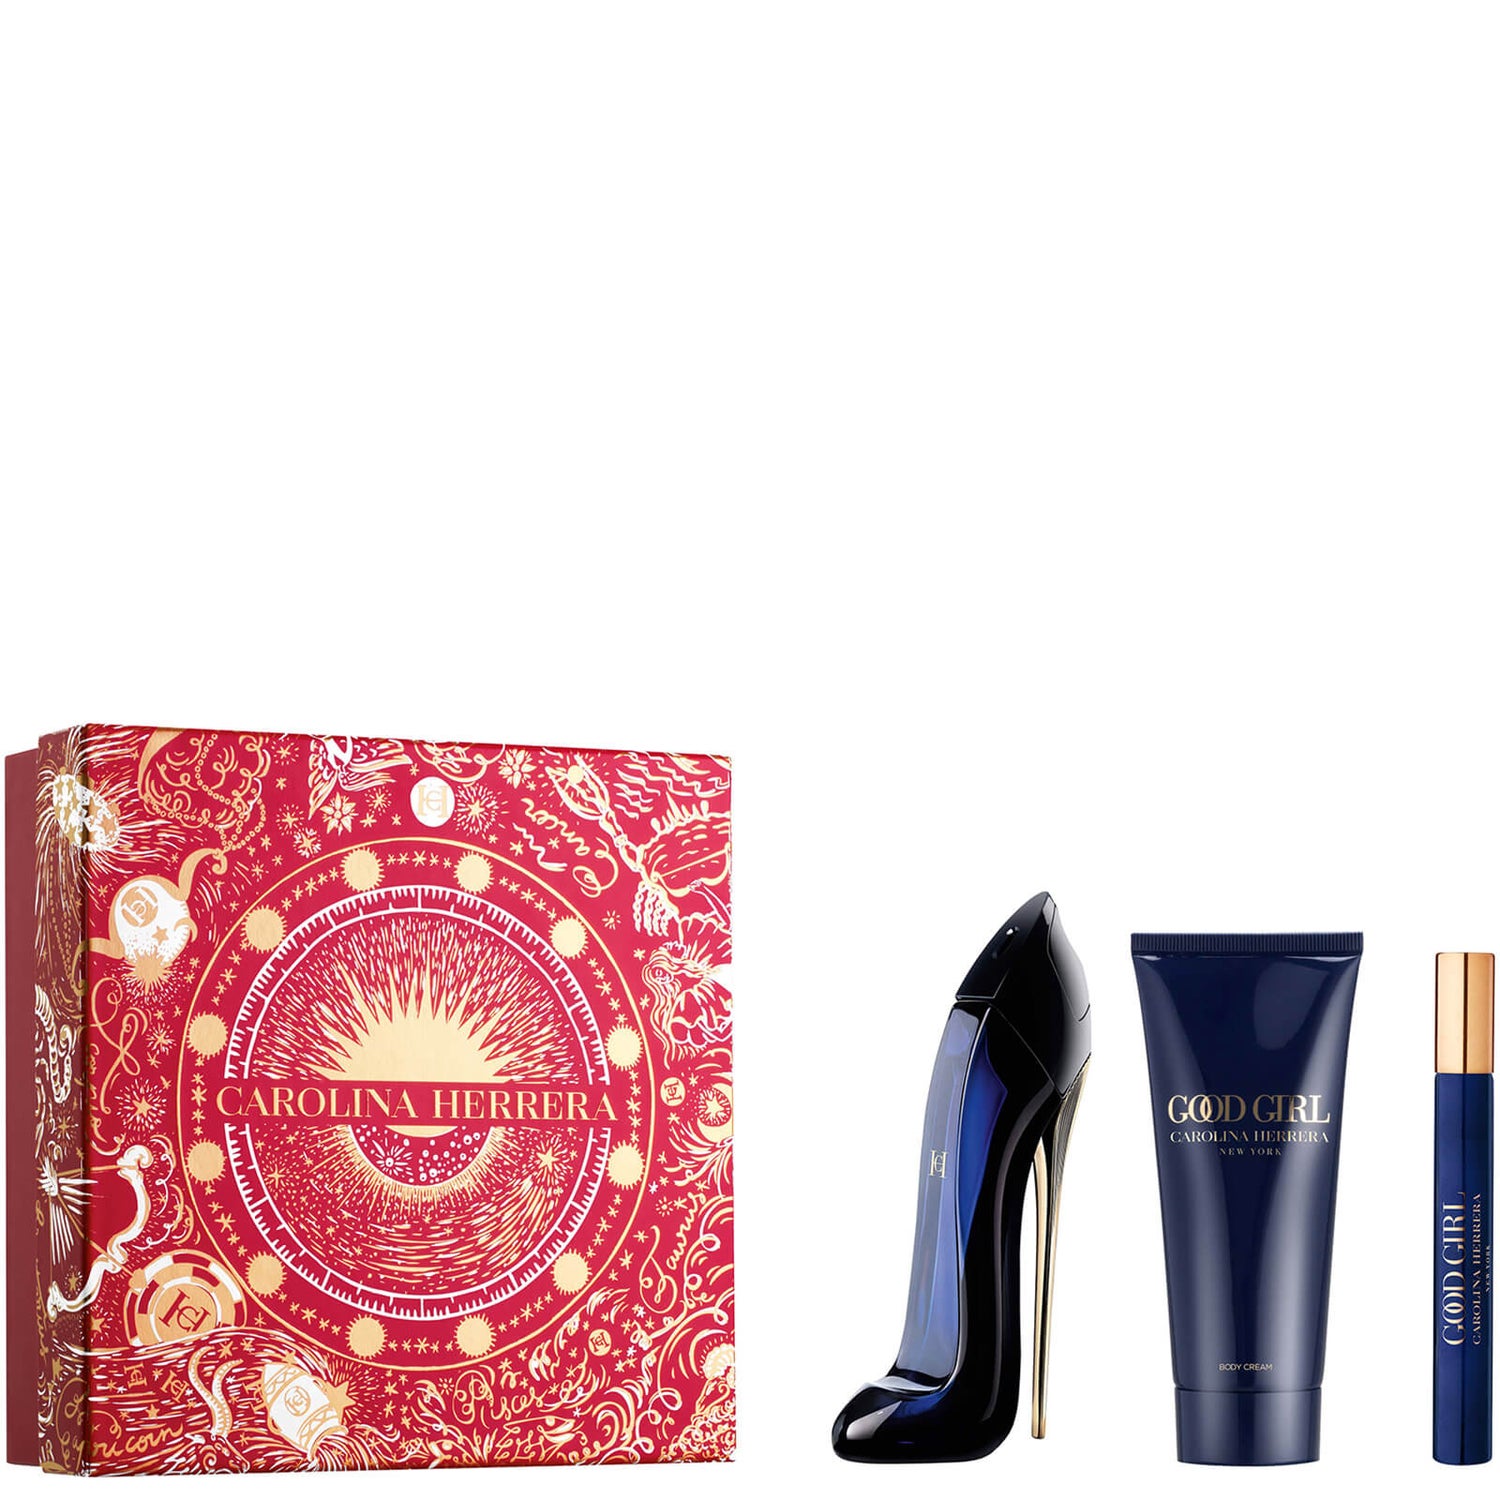 Carolina Herrera Good Girl Eau de Parfum 80ml Gift Set - Gratis  Lieferservice weltweit